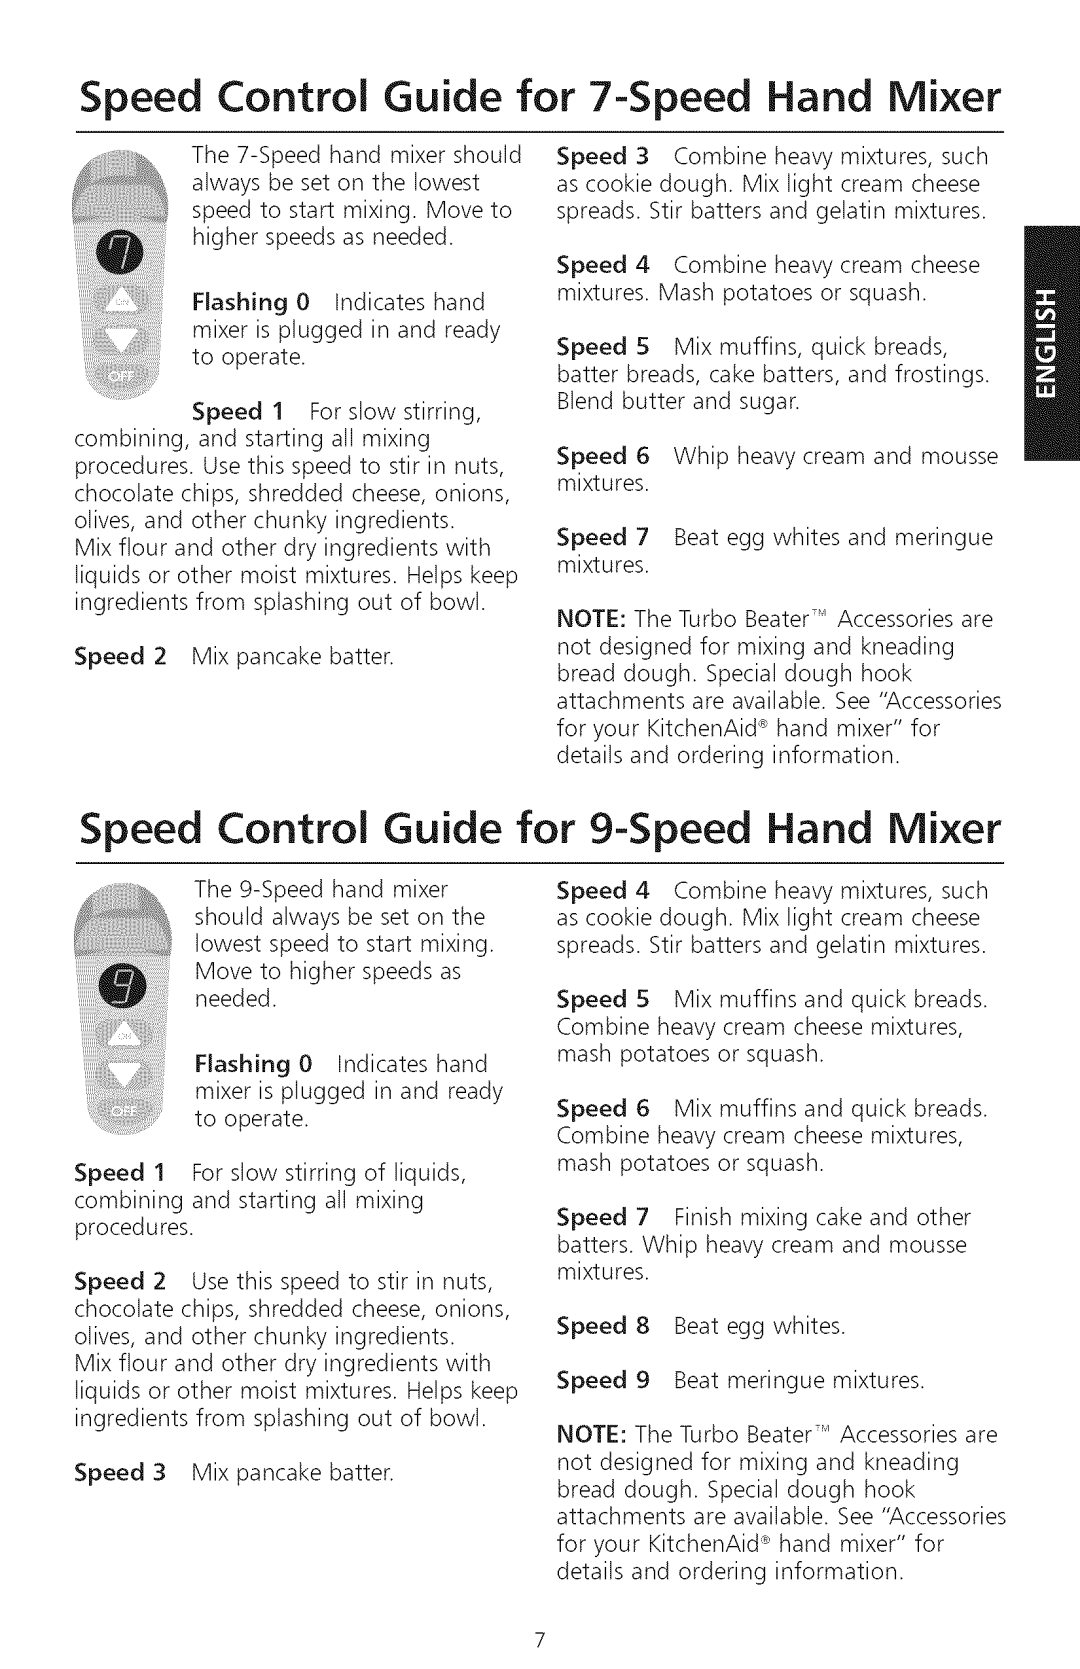 KitchenAid KHM720, KHM920 manual Speed Control Guide for 9Speed Hand Mixer, Speed Control Guide for 7-Speed Hand Mixer 